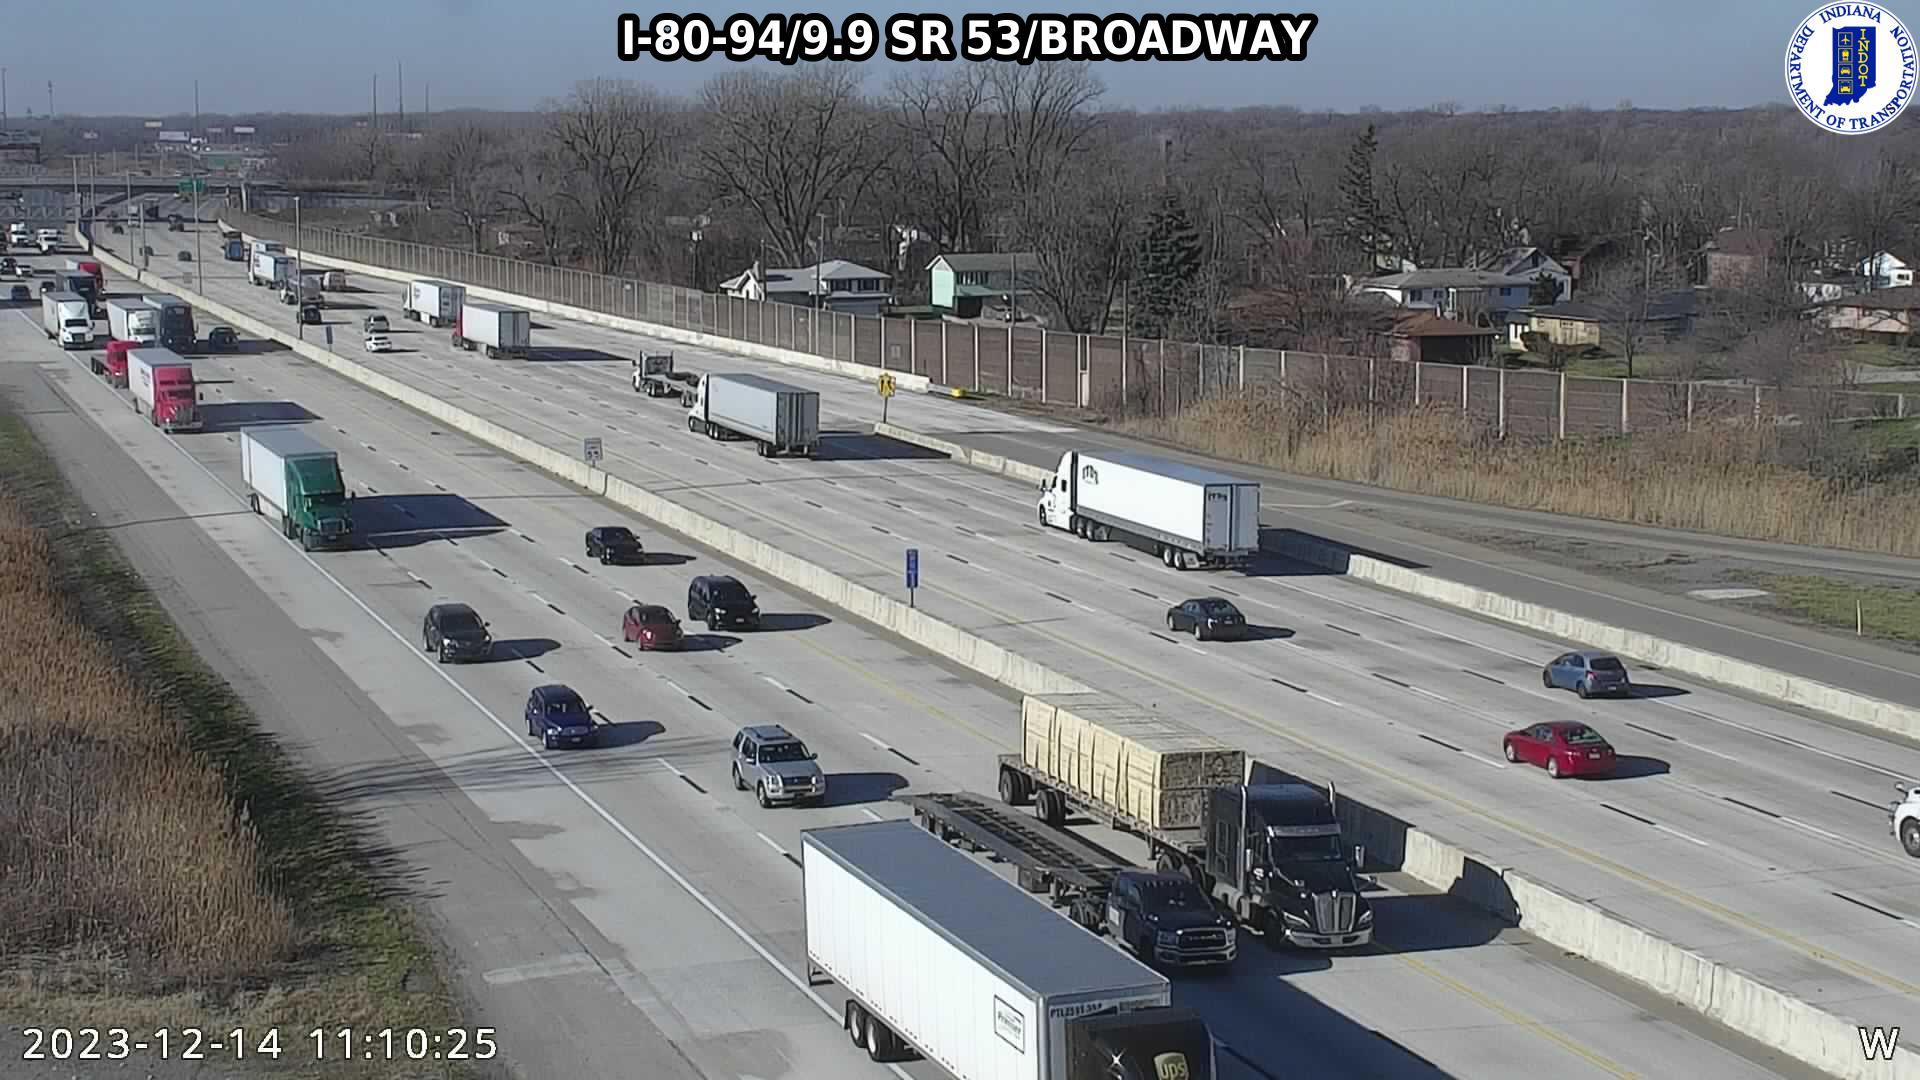 Traffic Cam Gary: I-94: I-80-94/9.9 SR 53/BROADWAY Player